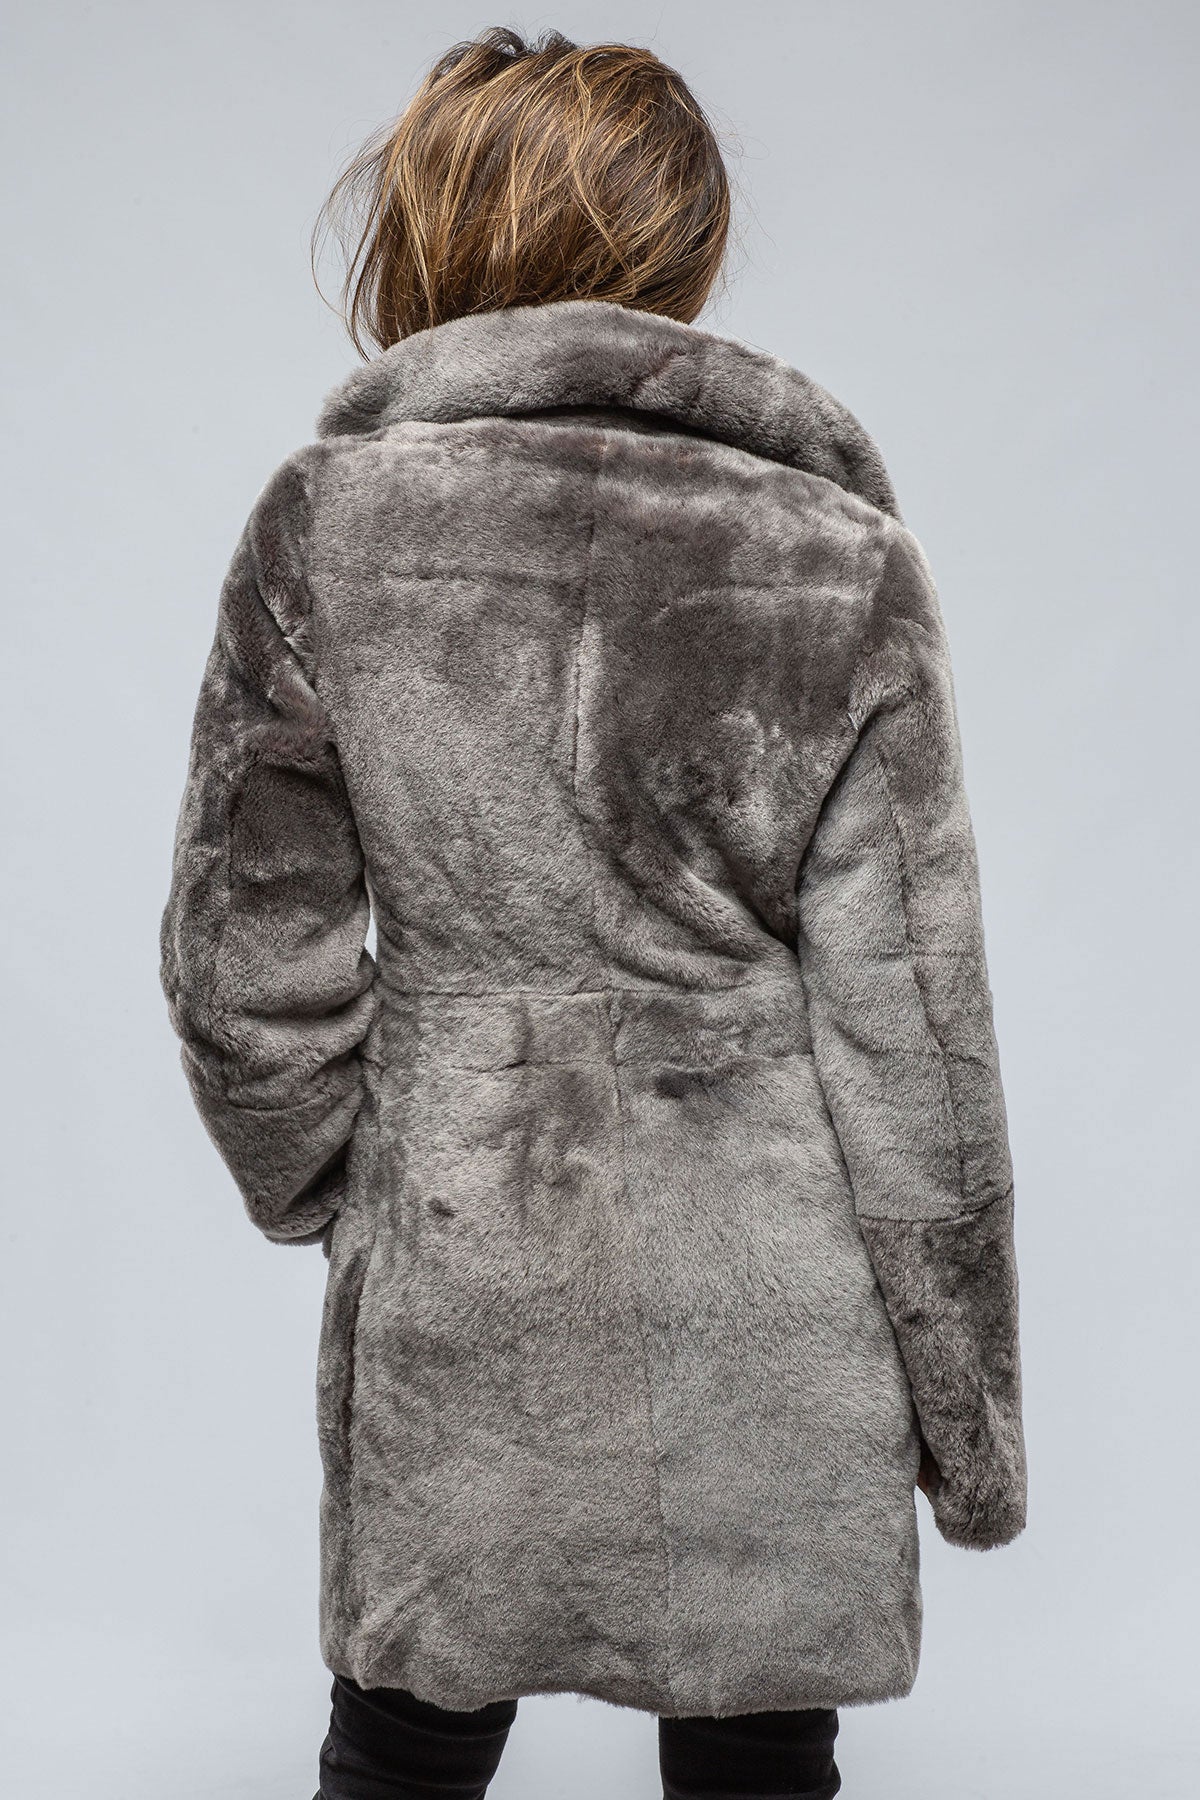 Bern Reversible Shearling W/ High Collar In Cloud Grey | Ladies - Outerwear - Shearling | Artico